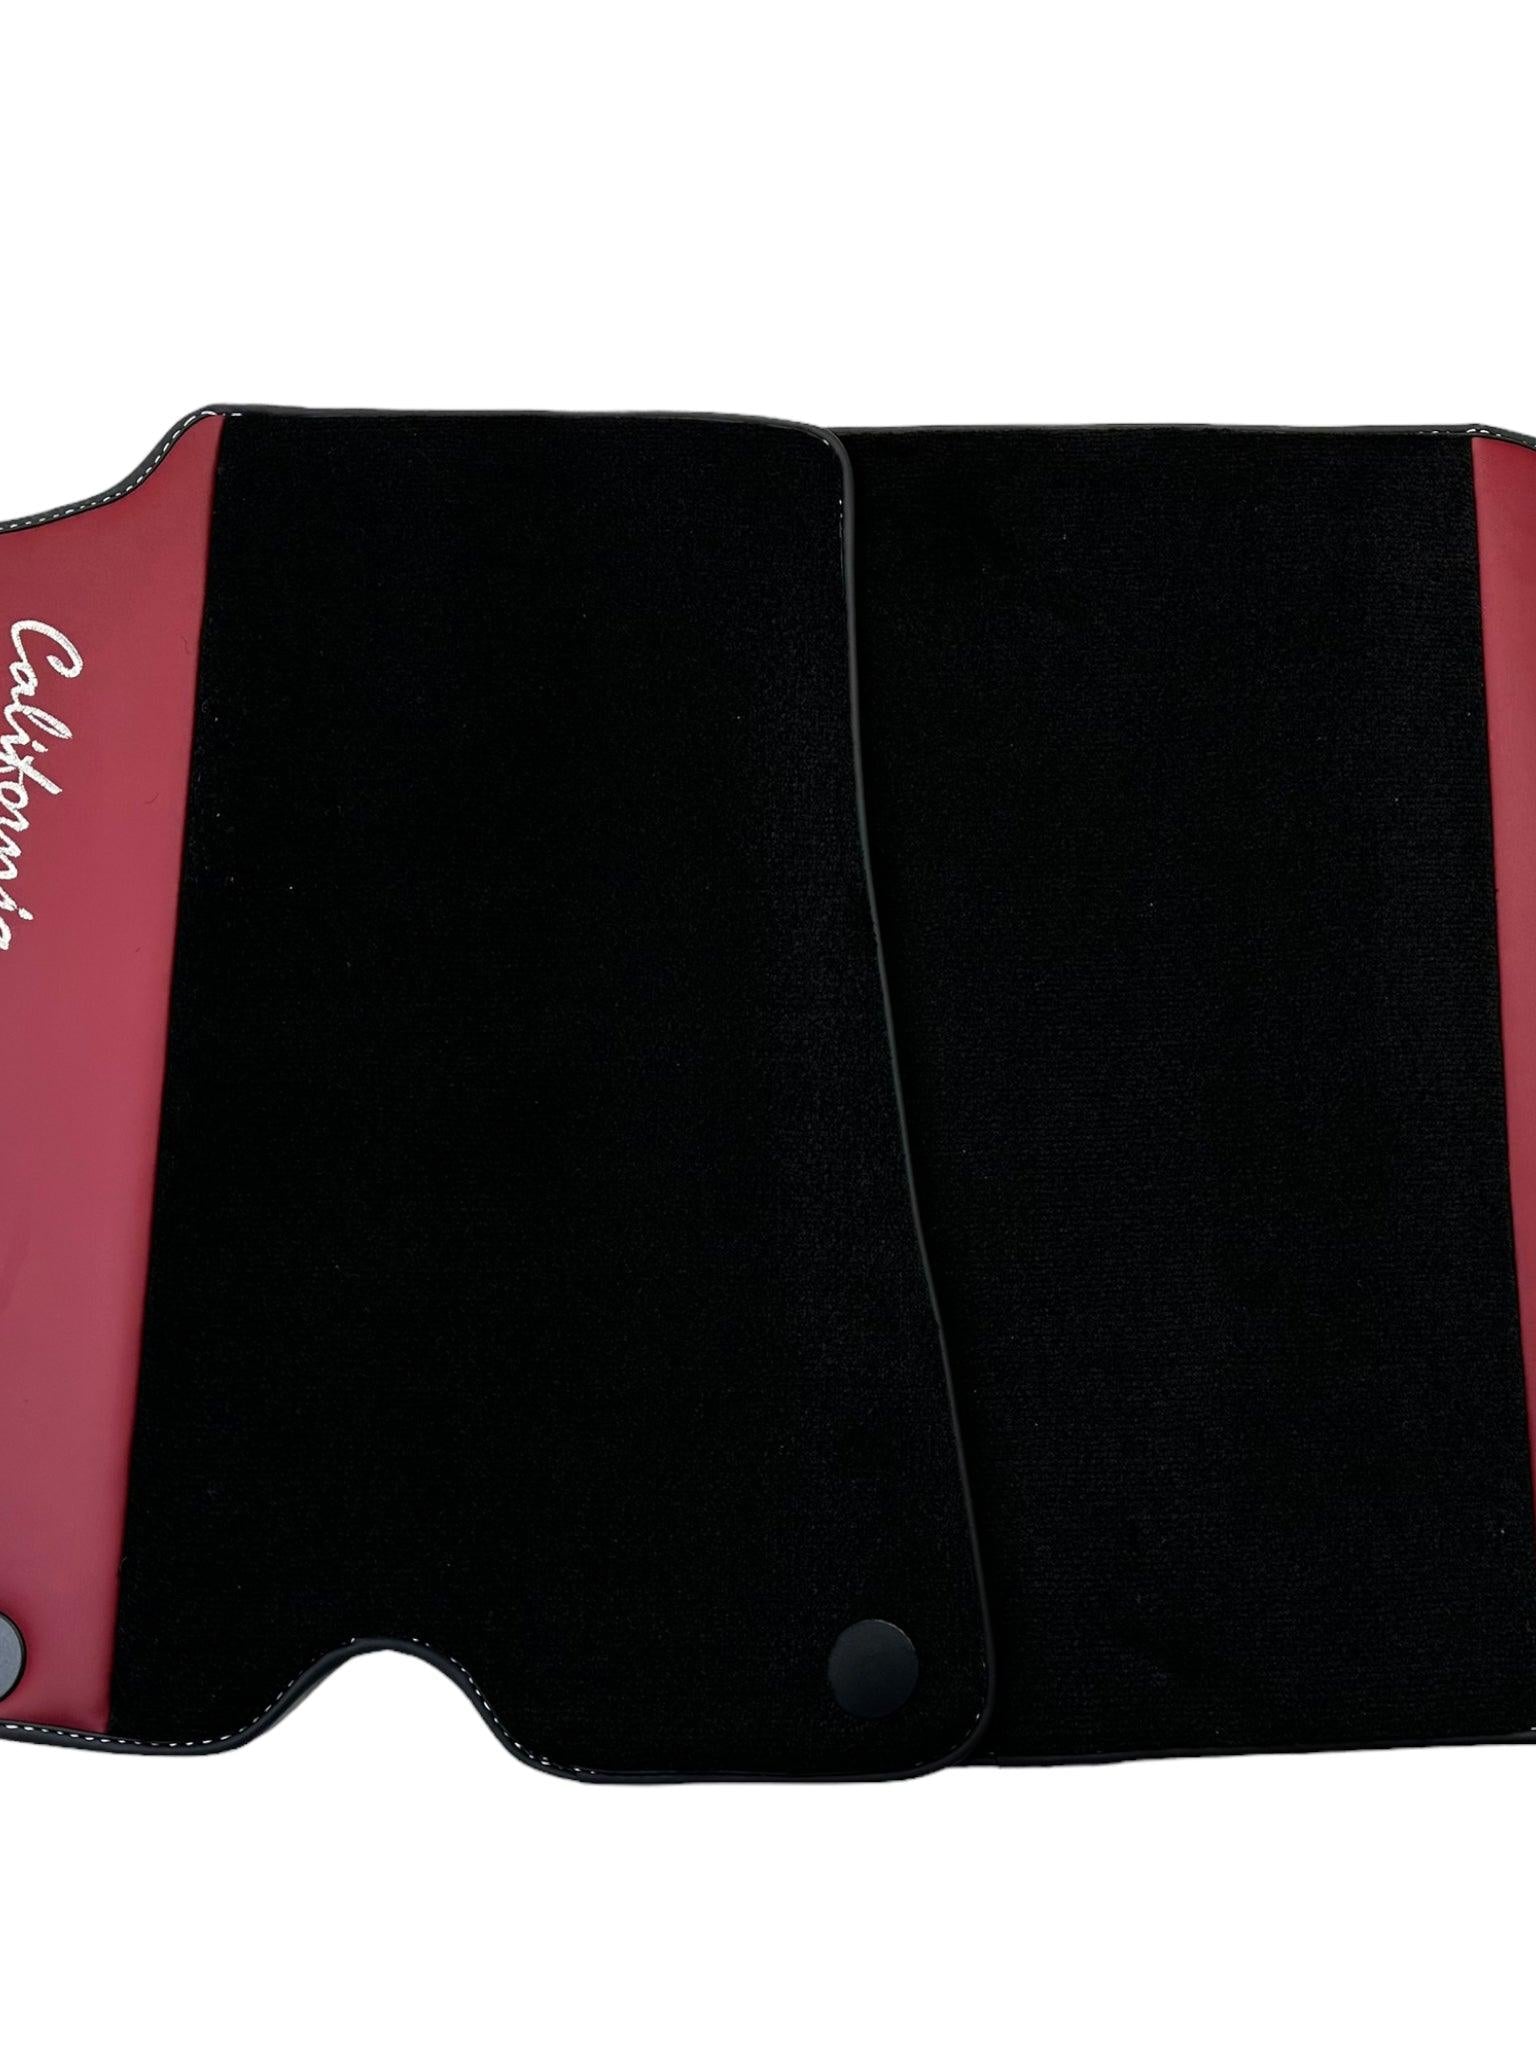 Black Floor Mats for Ferrari California (2008-2014) with Bordeaux Nappa Leather